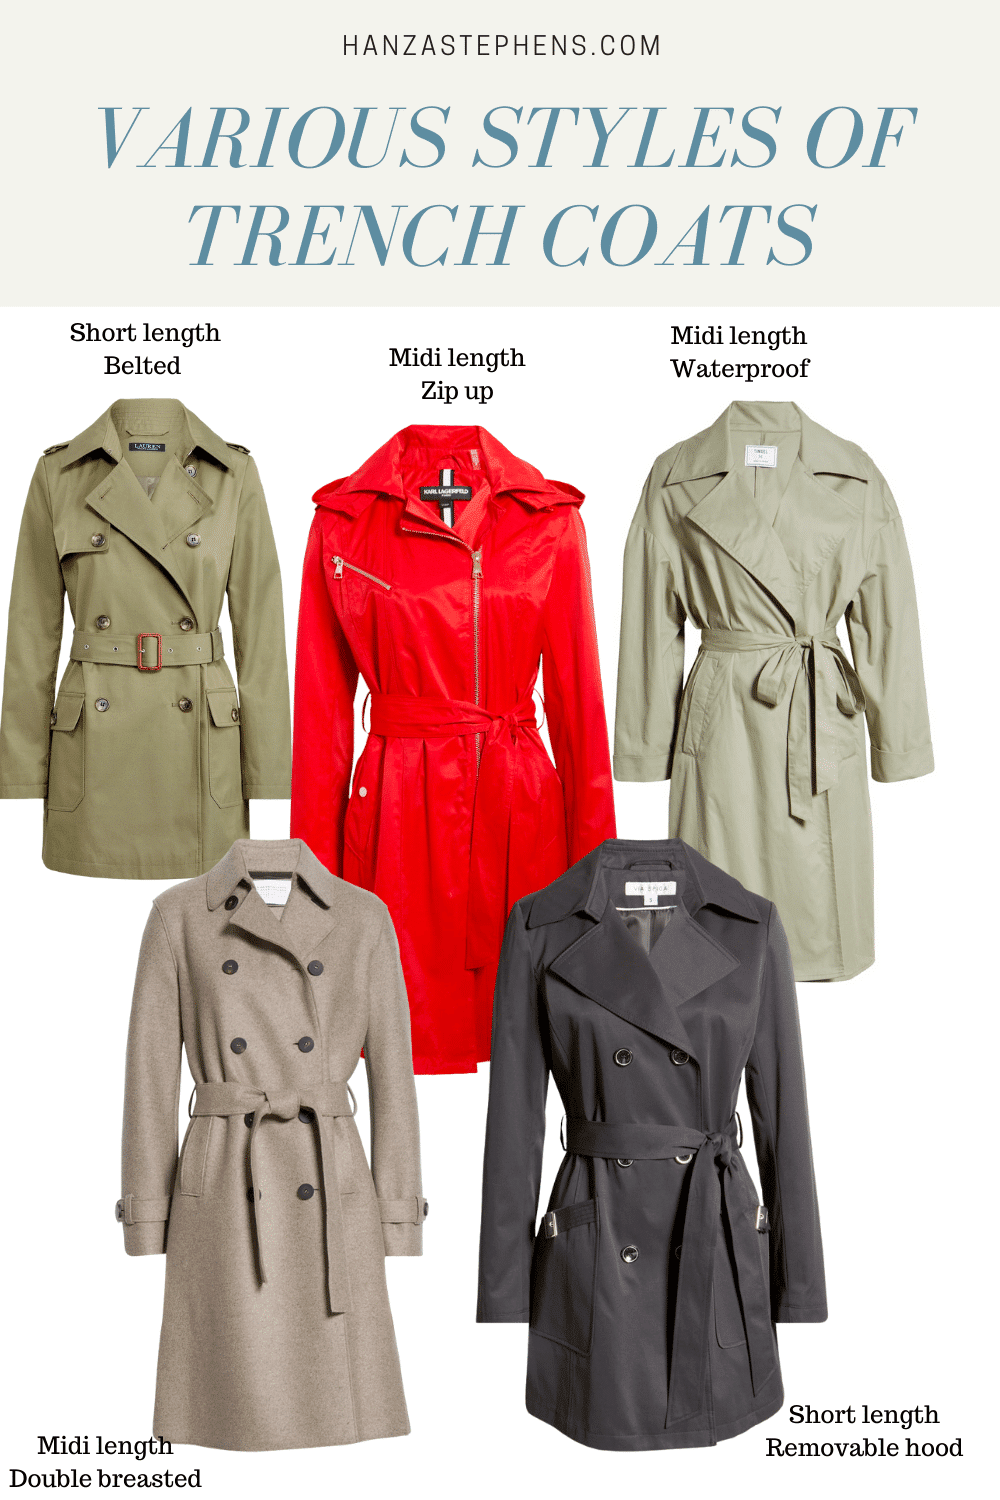 Trench Coats for your Winter Wardrobe - Hanzastephens